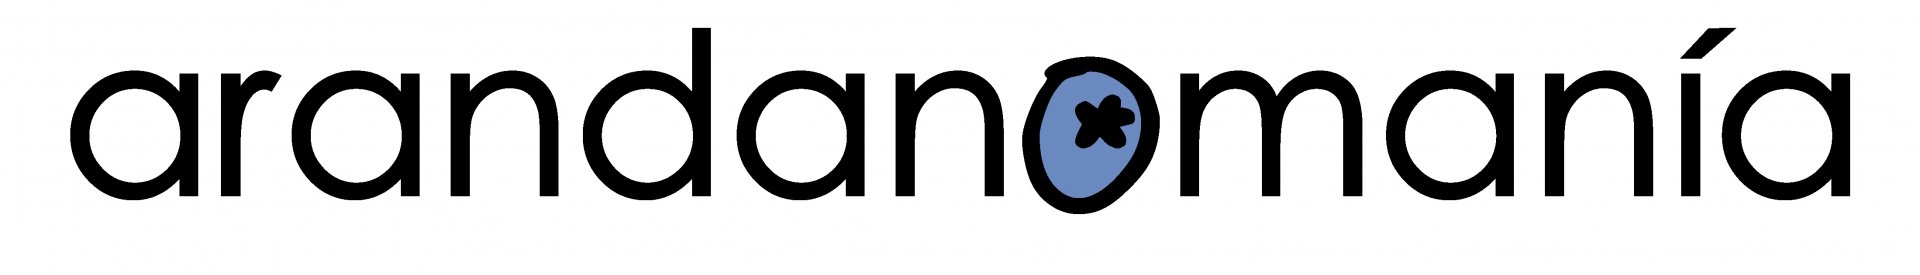 logo arandanomania-03.jpg